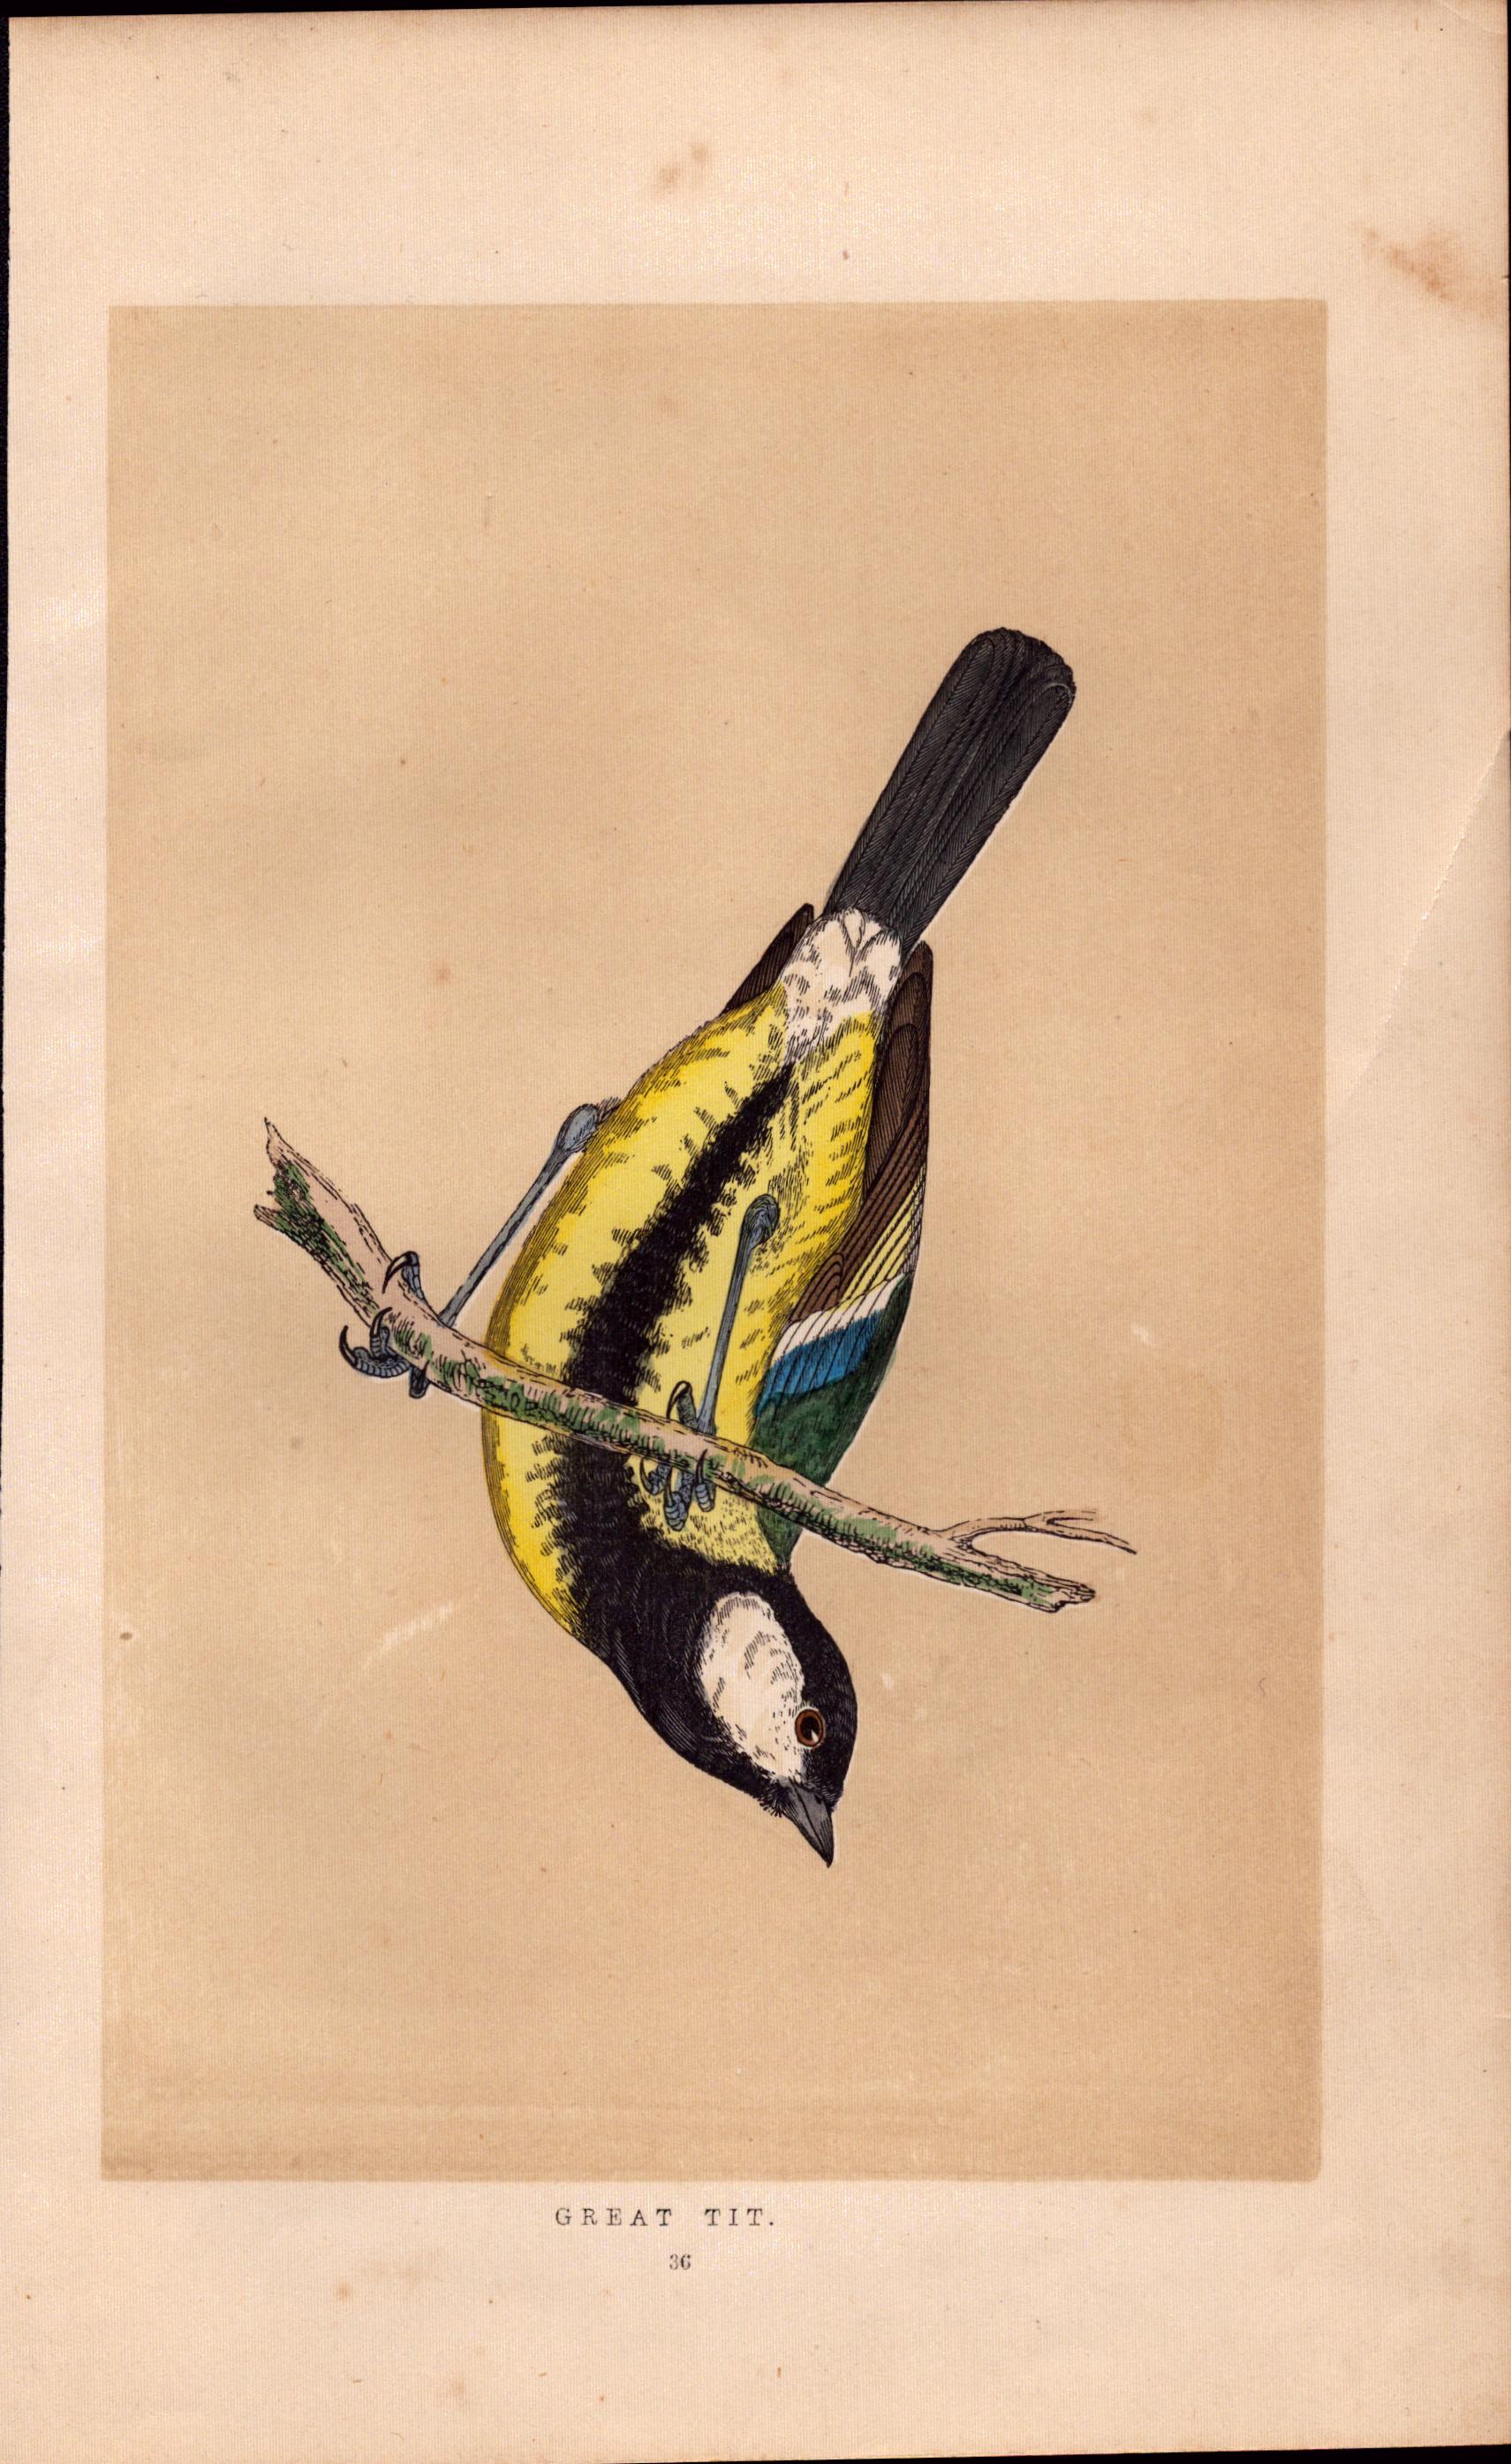 Great Tit Rev Morris Antique History of British Birds Engraving.